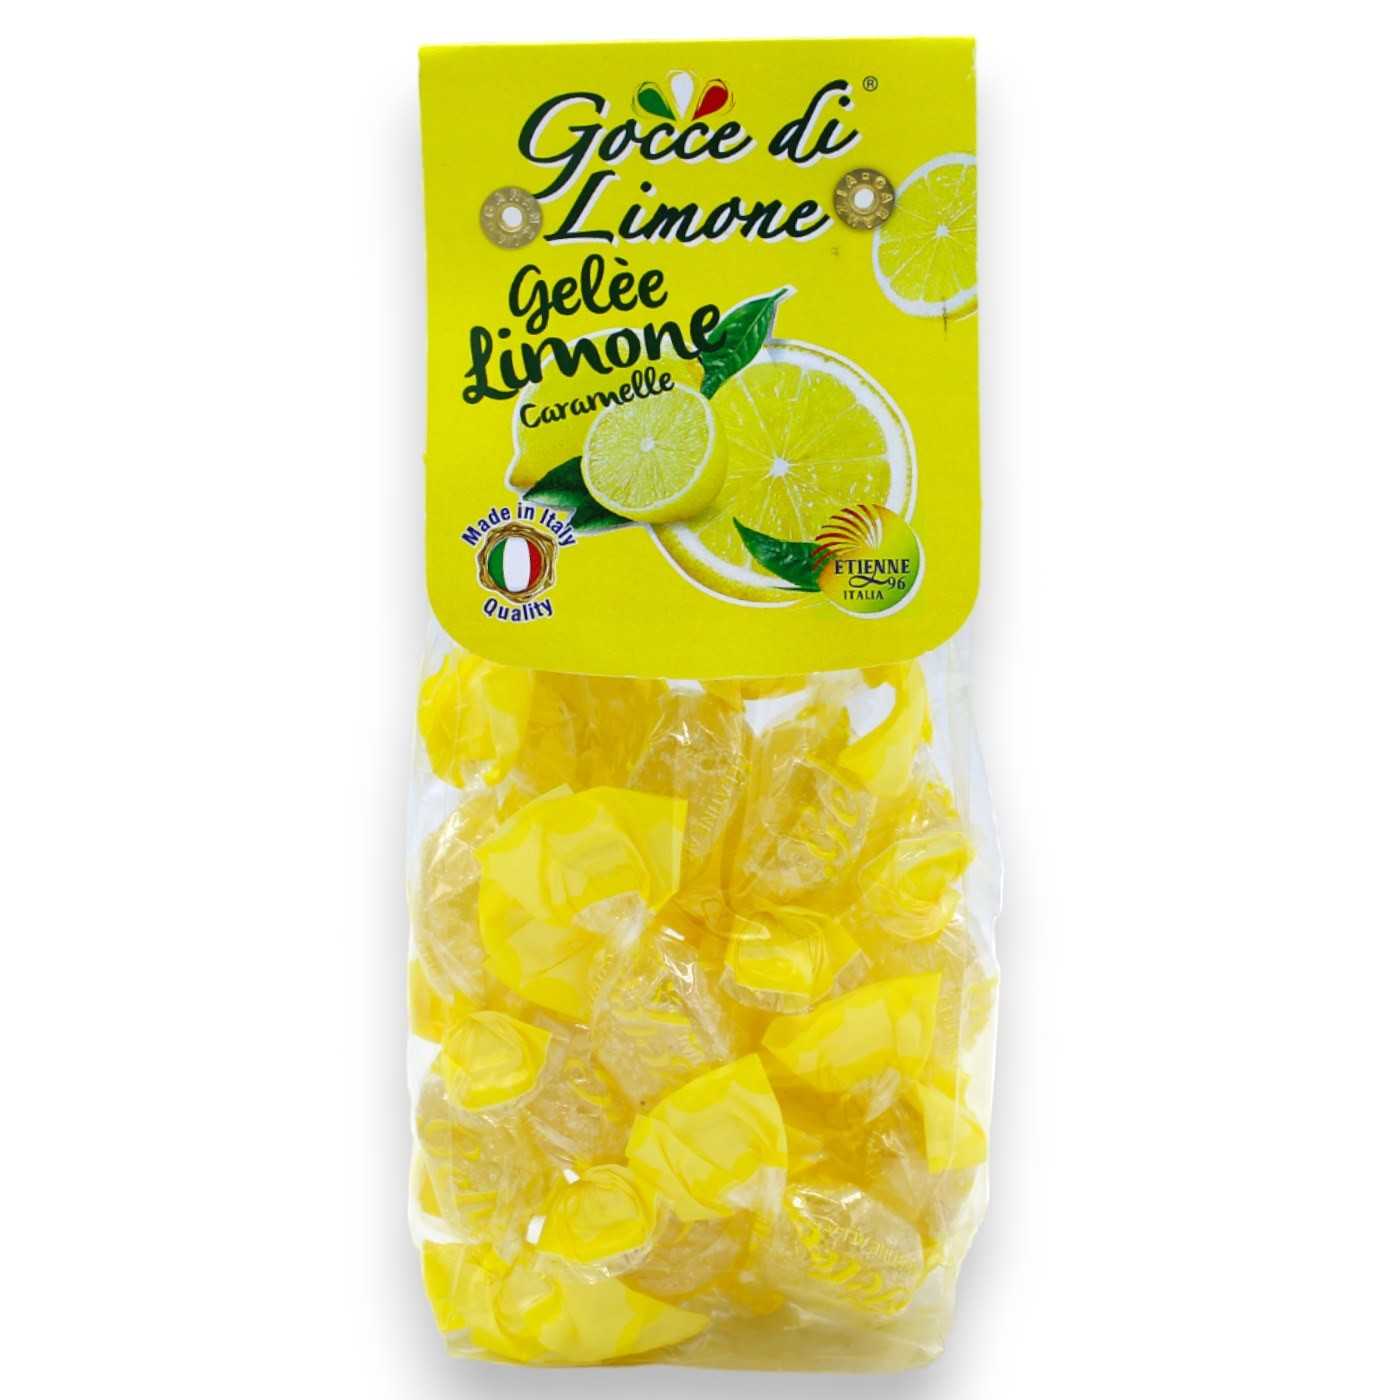 Morbide caramelle Gelèe al Limone - 150g